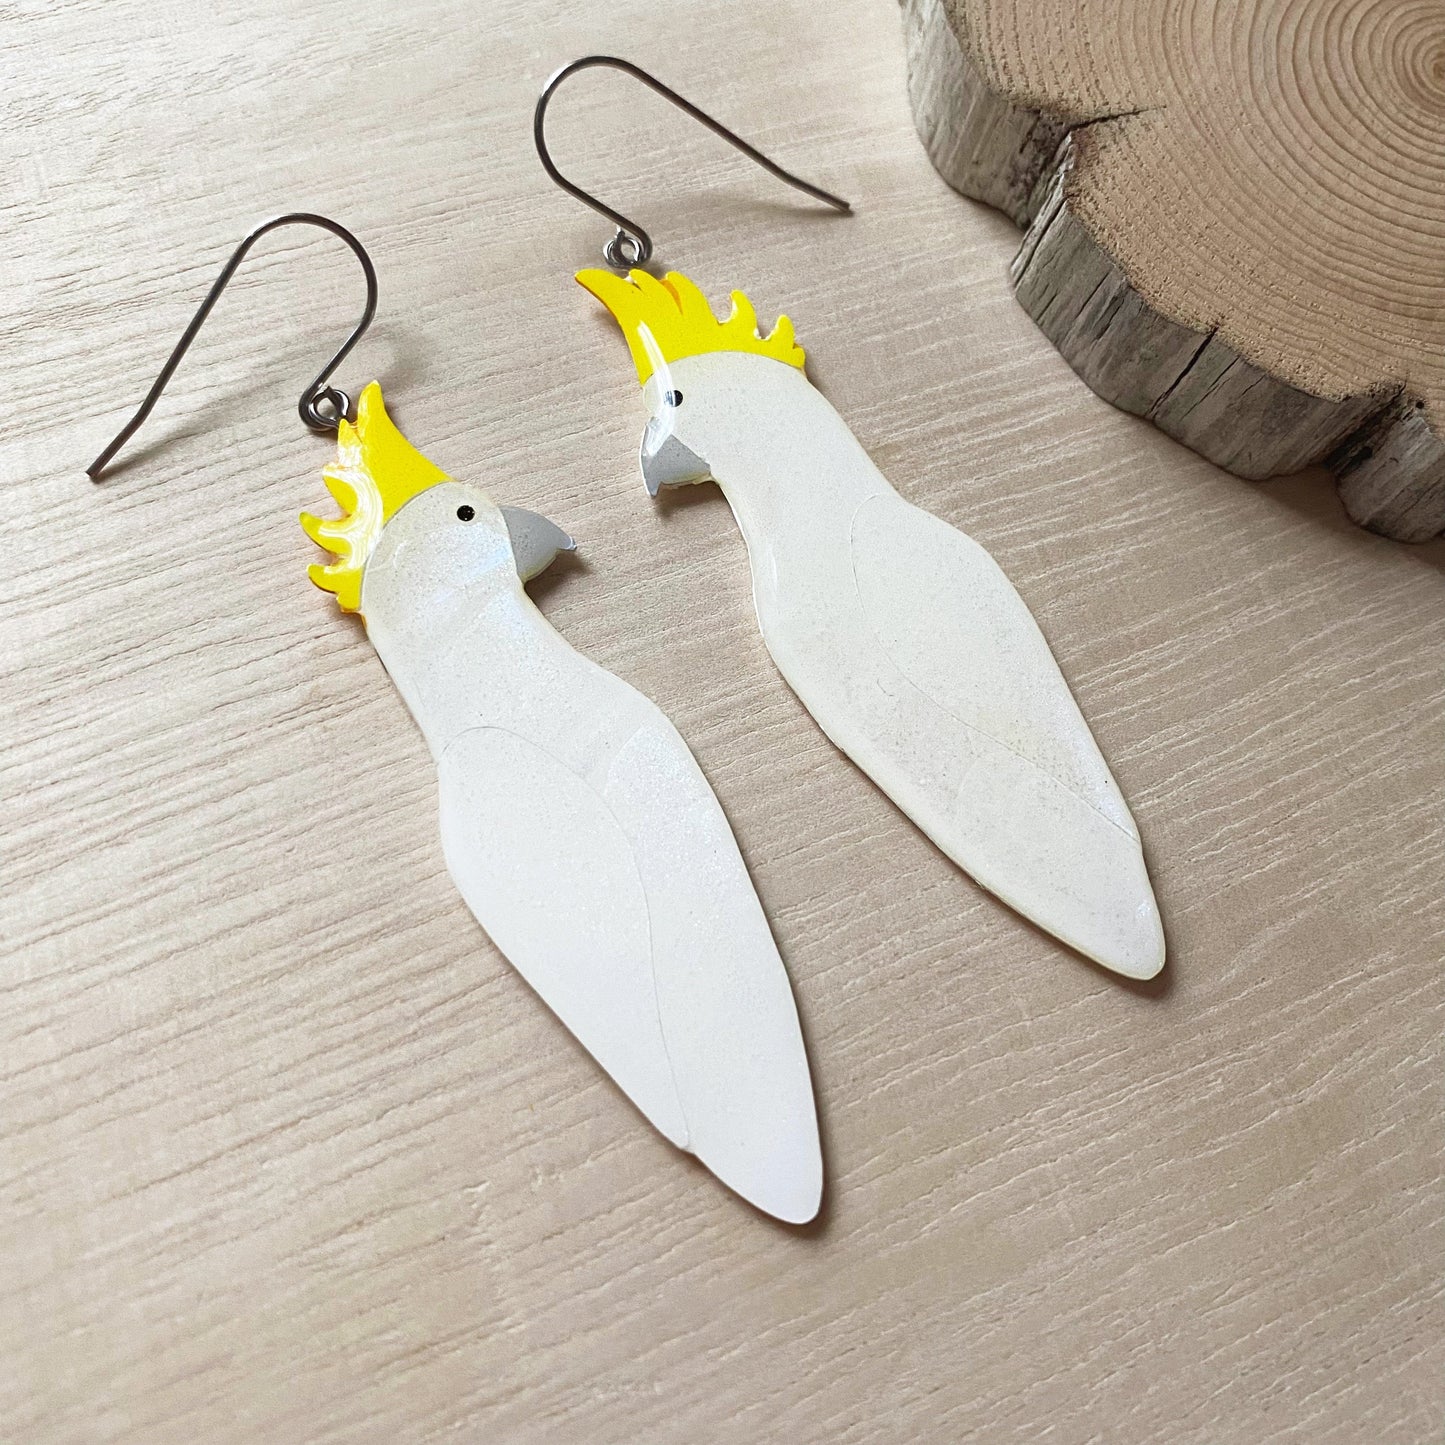 Lacroz Creations Earrings Sulphur-Crested Cockatoo Earrings